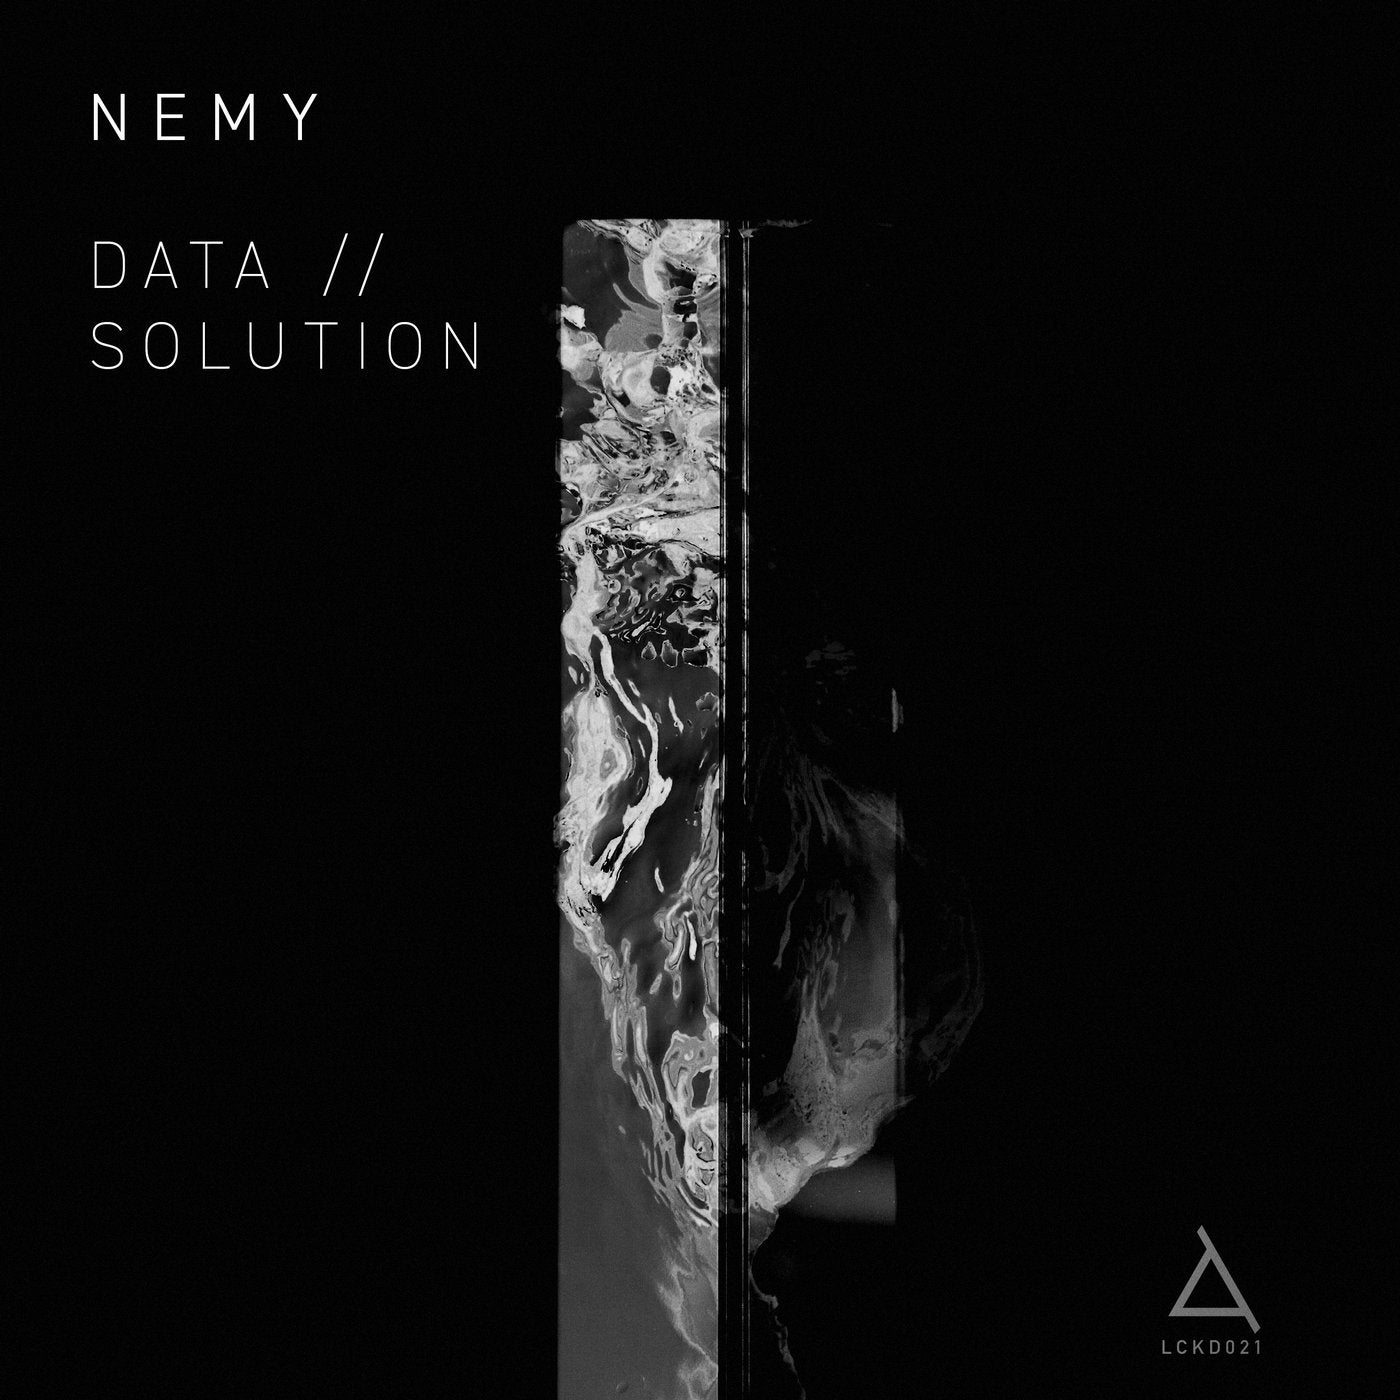 Data/Solution